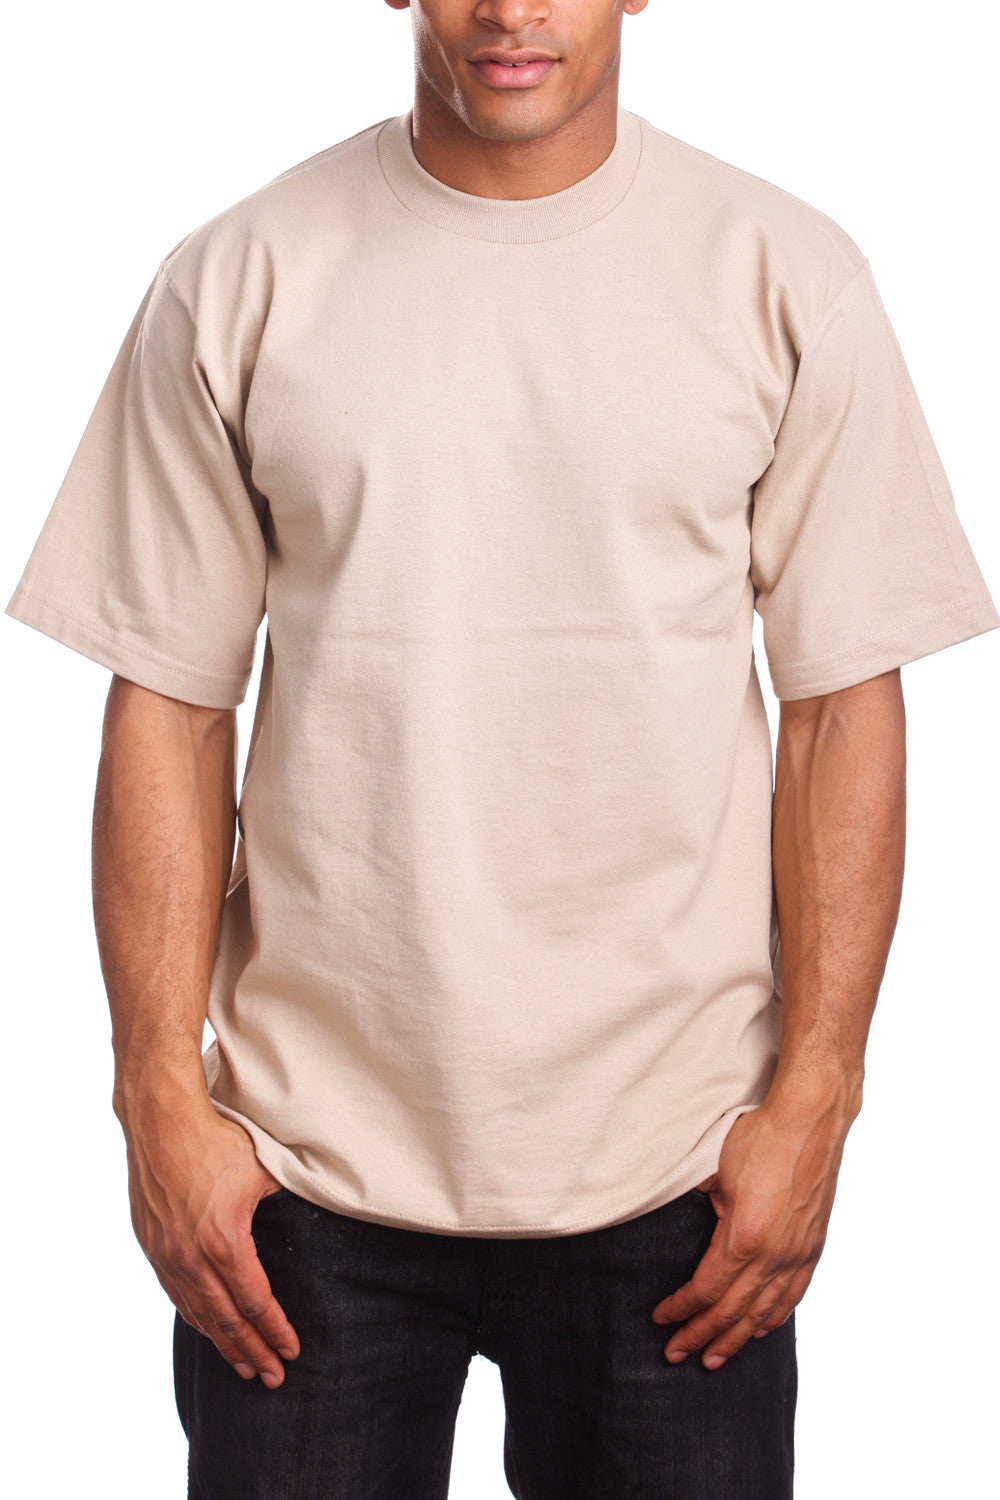 Athletic Fit T-Shirts 2XL - 7XL – Pro 5 USA